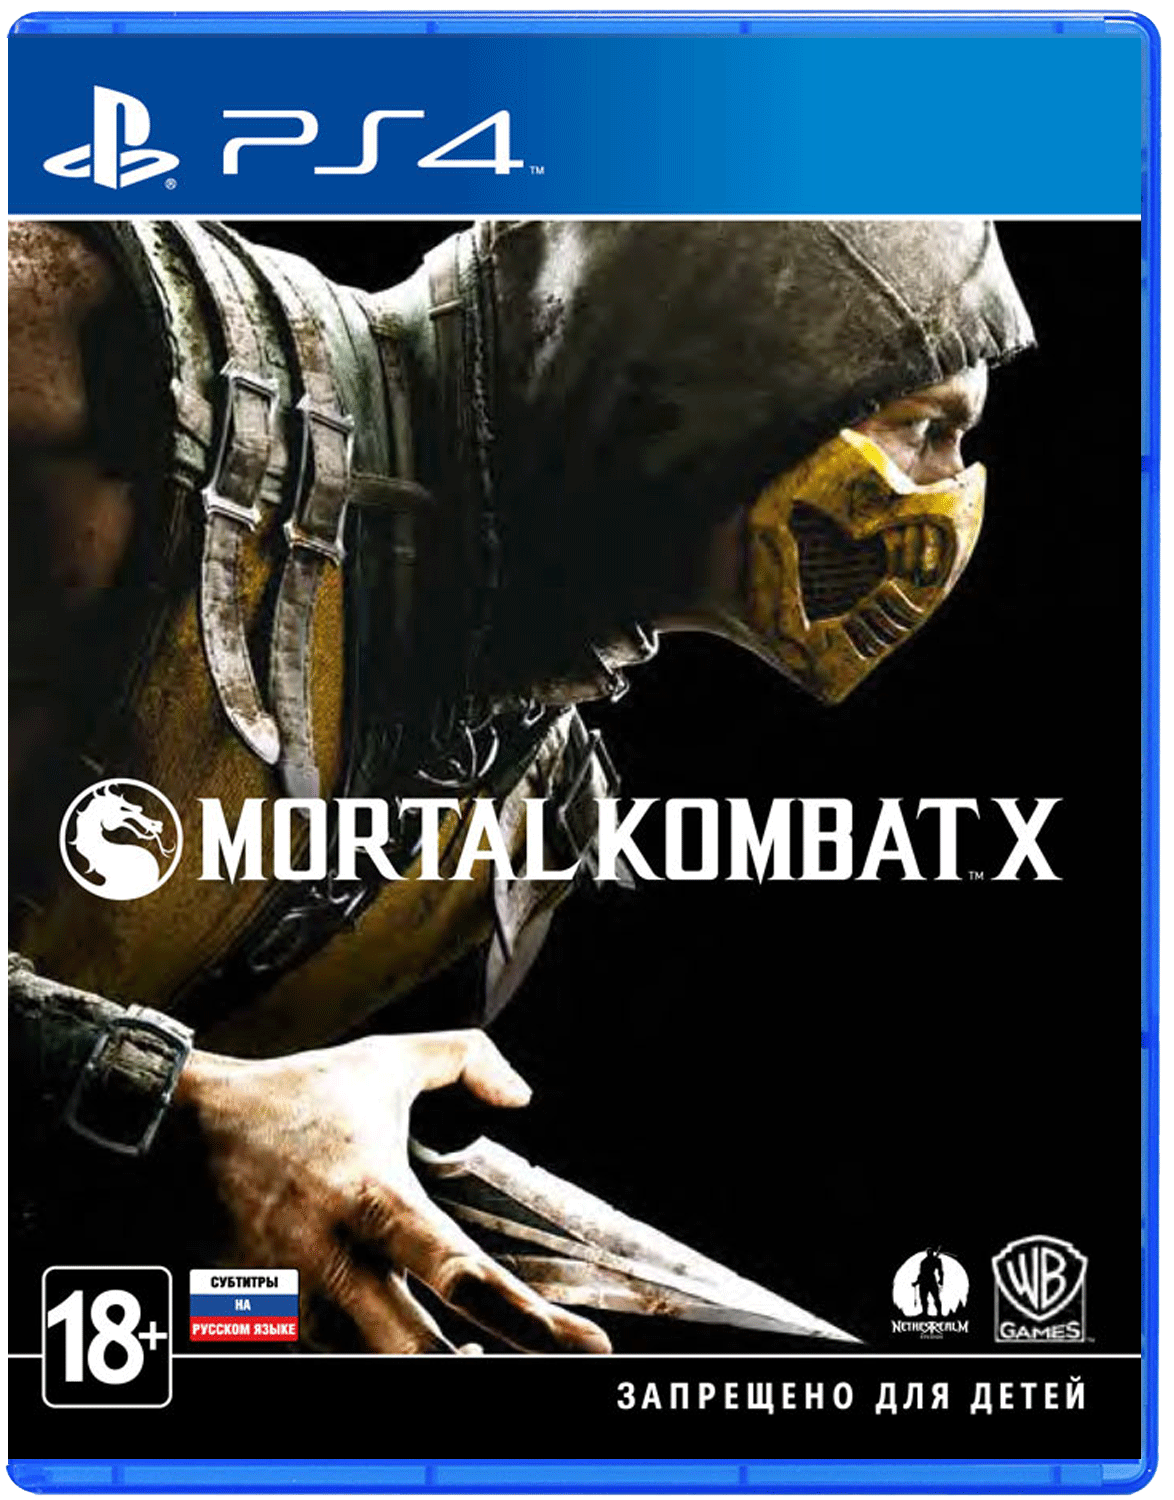 Игры на плейстейшен мортал комбат. Диск на ПС 4 мортал комбат. Mortal Kombat x ps4 диск. Mortal Kombat 10 диск пс4. Диск ps4 мортал комбат x.